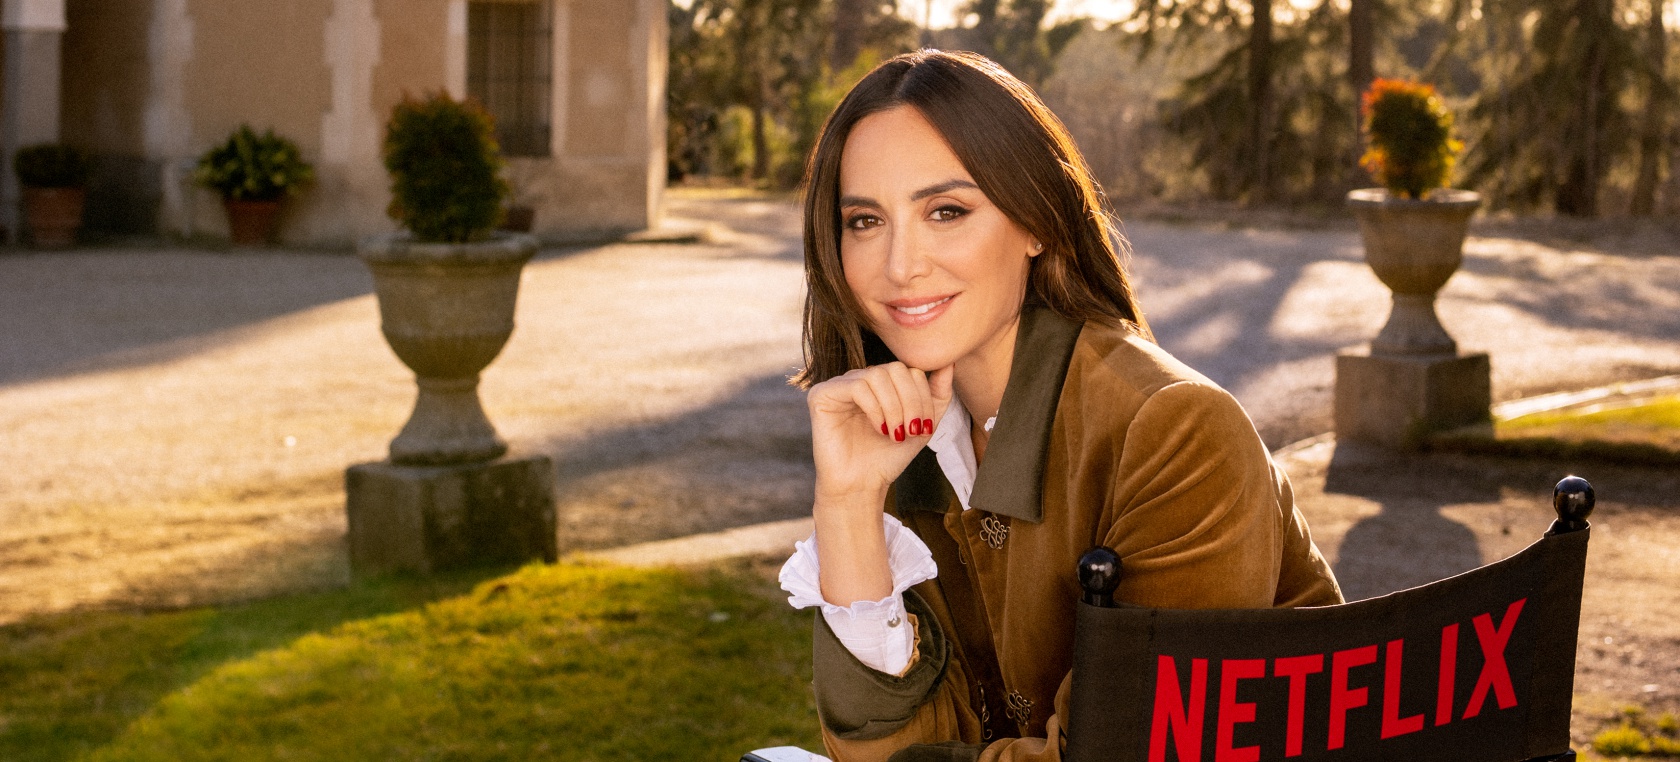 Tamara Falcó se estrena en Netflix: “Pensaba que podíamos perderlo todo, pero no quería quedarme con la duda”